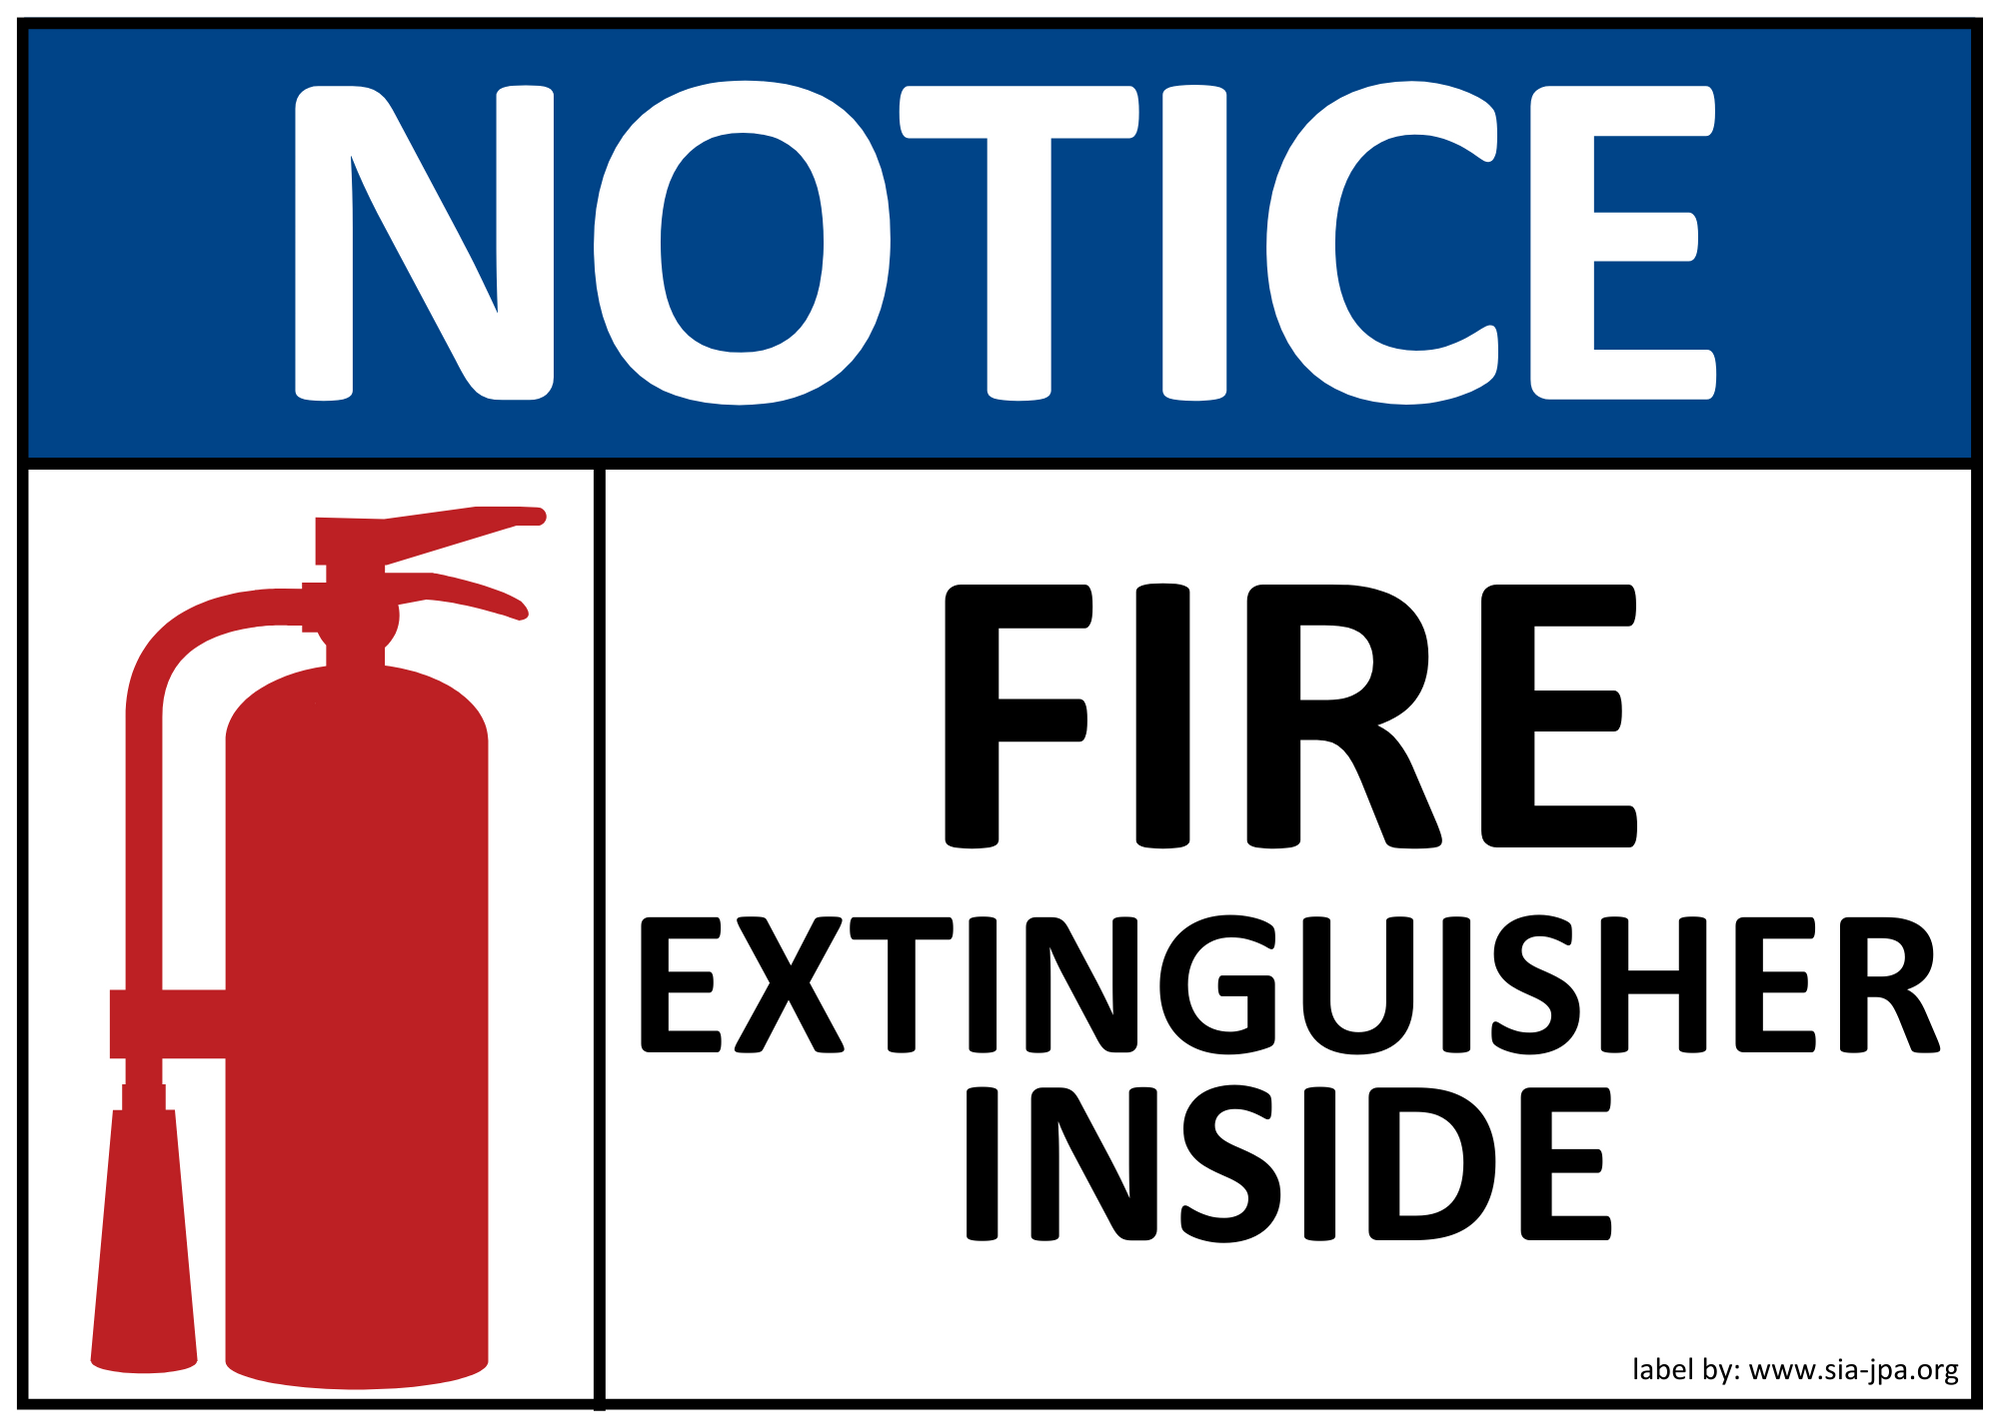 Notice Fire Extinguisher Inside. Label by: www.sia-jpa.org